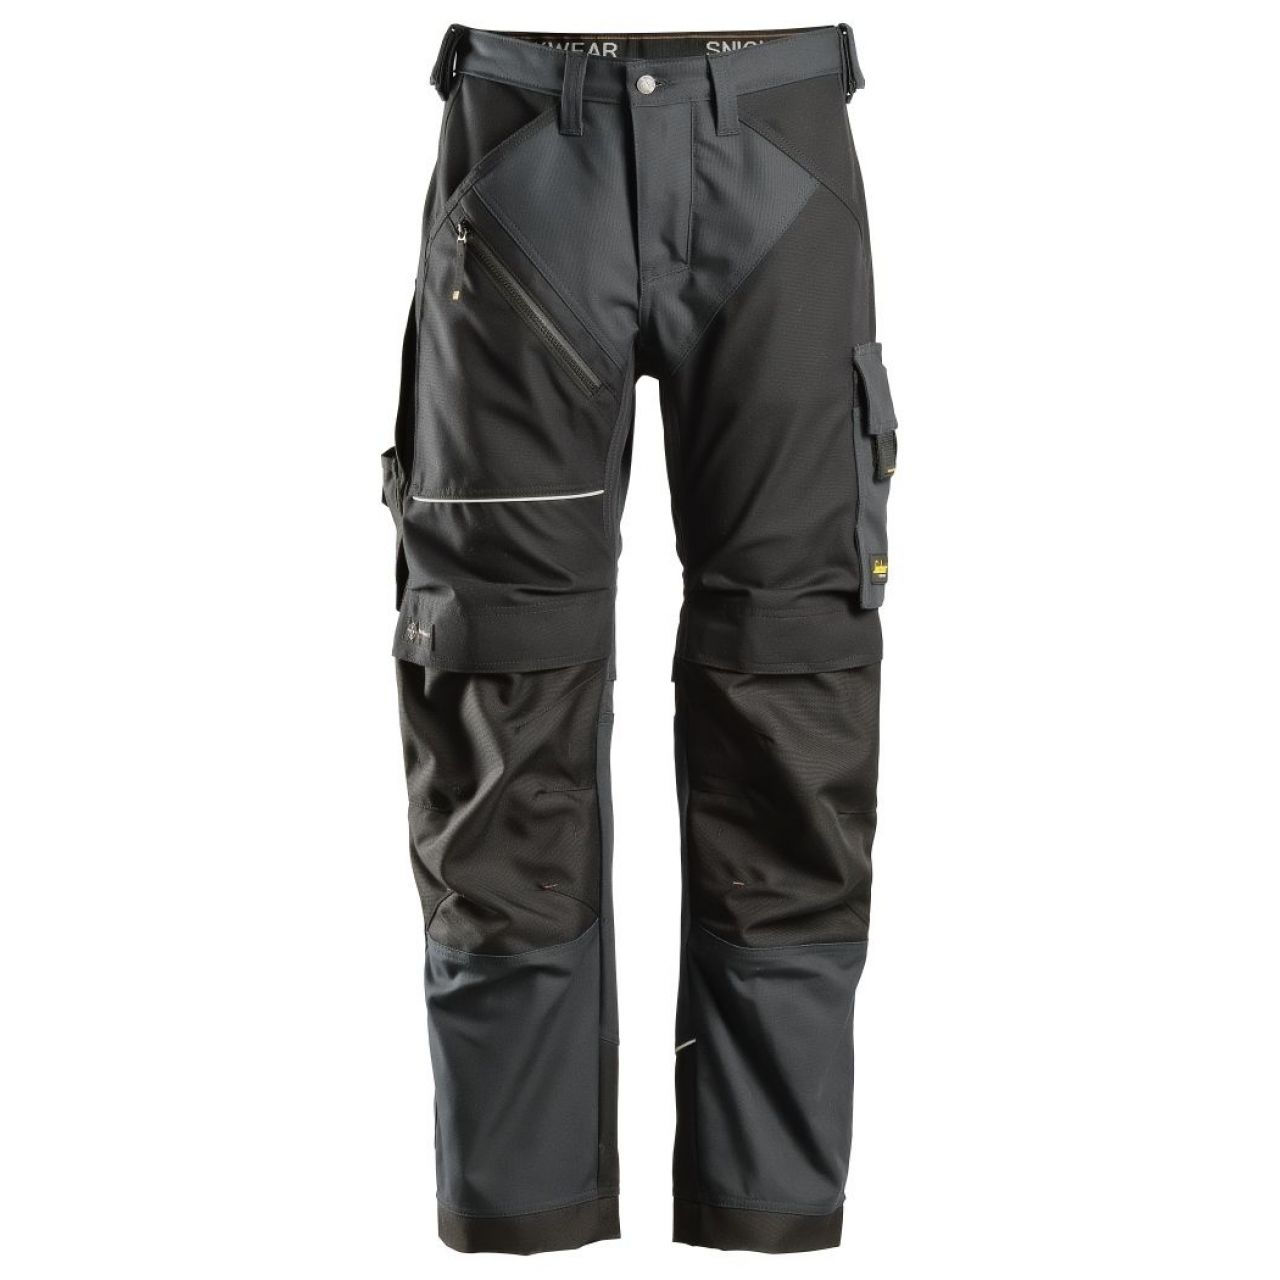 Pantalon Canvas+ RuffWork gris acero-negro talla 252